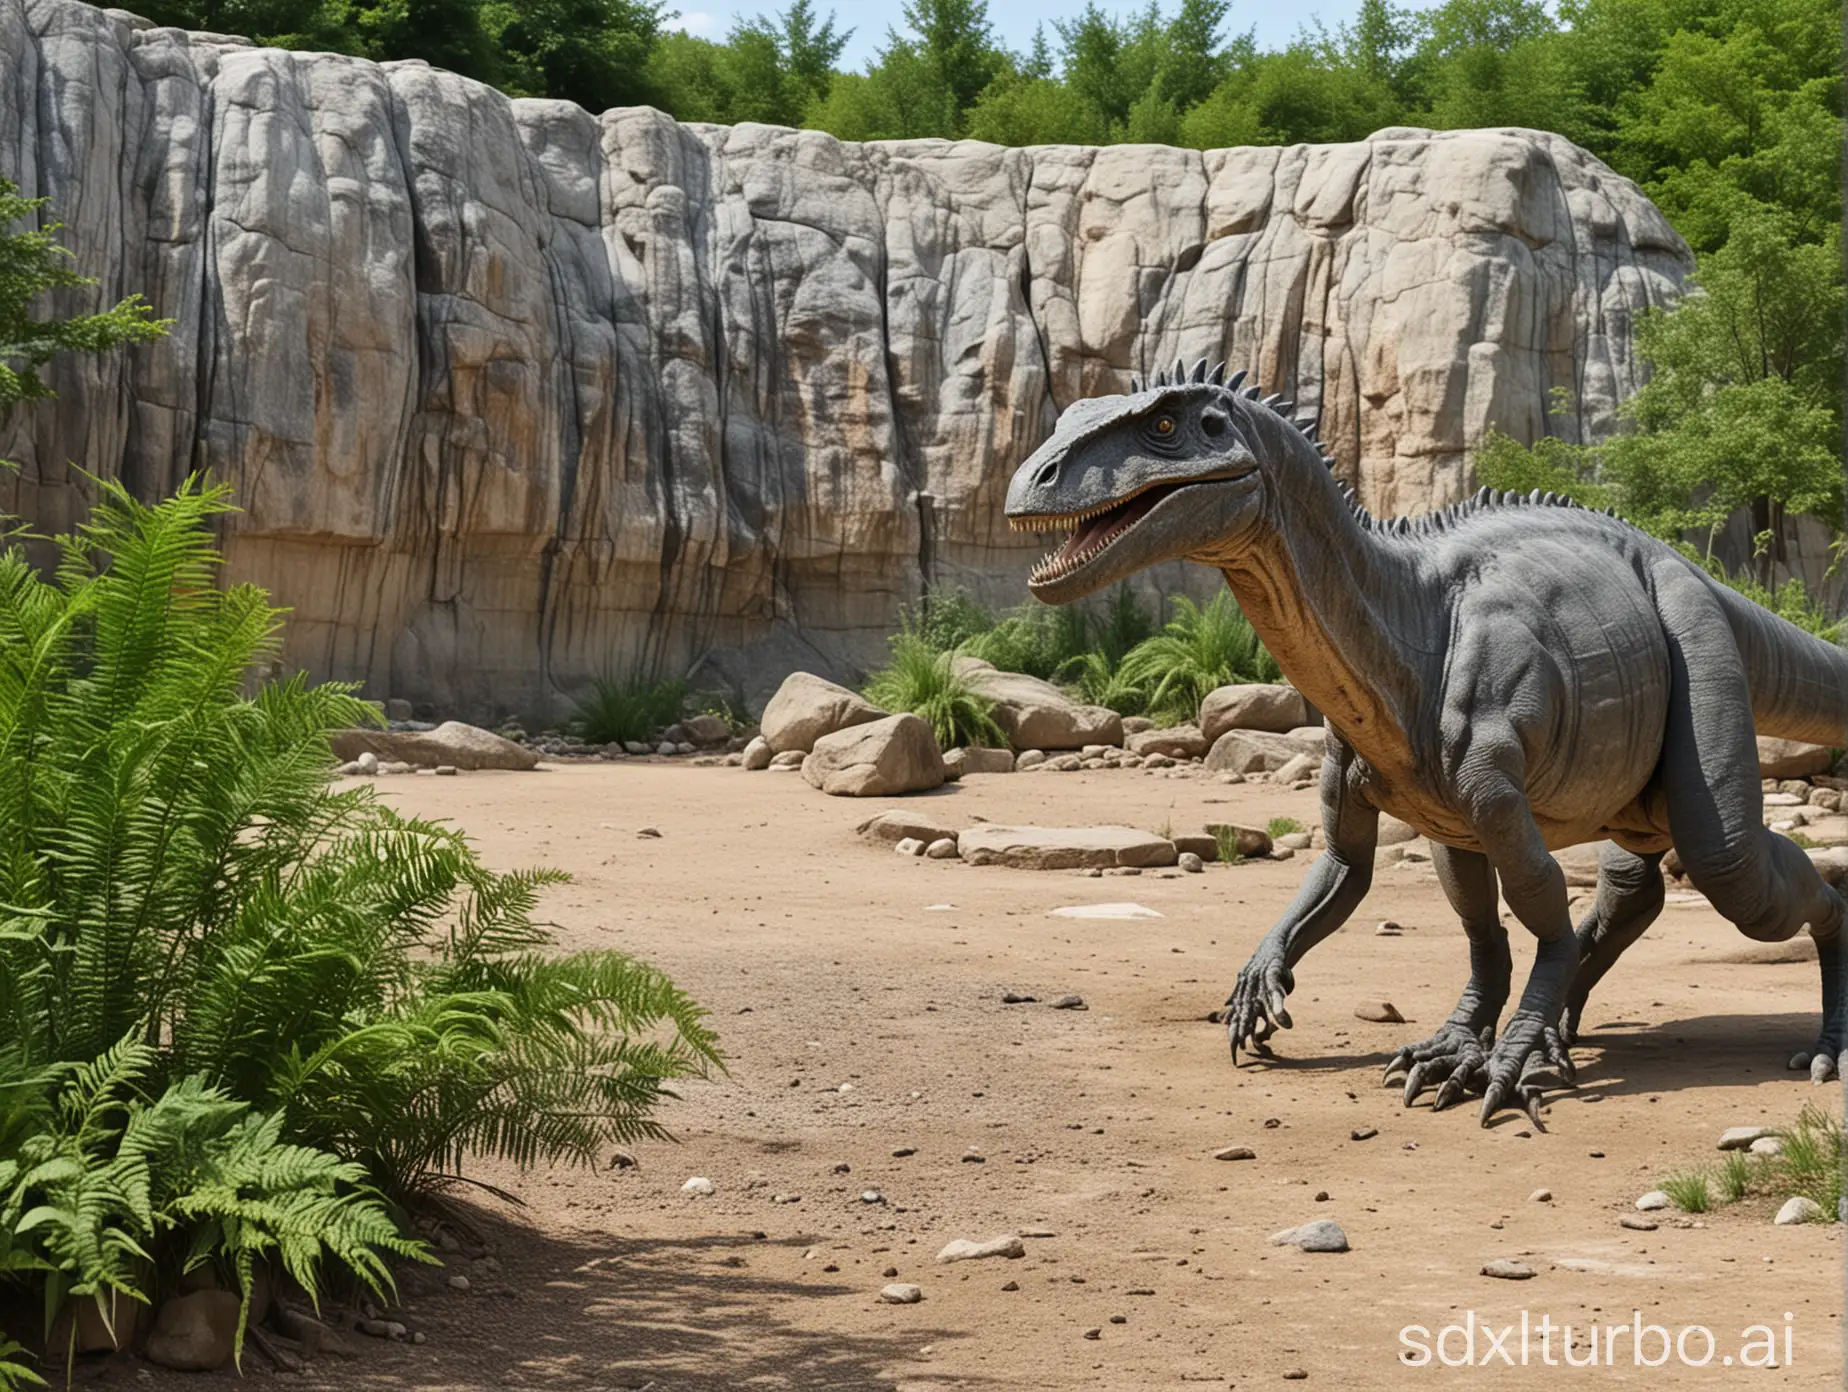 Allosaurus-in-Zoo-Enclosure-Before-Stone-Pavement